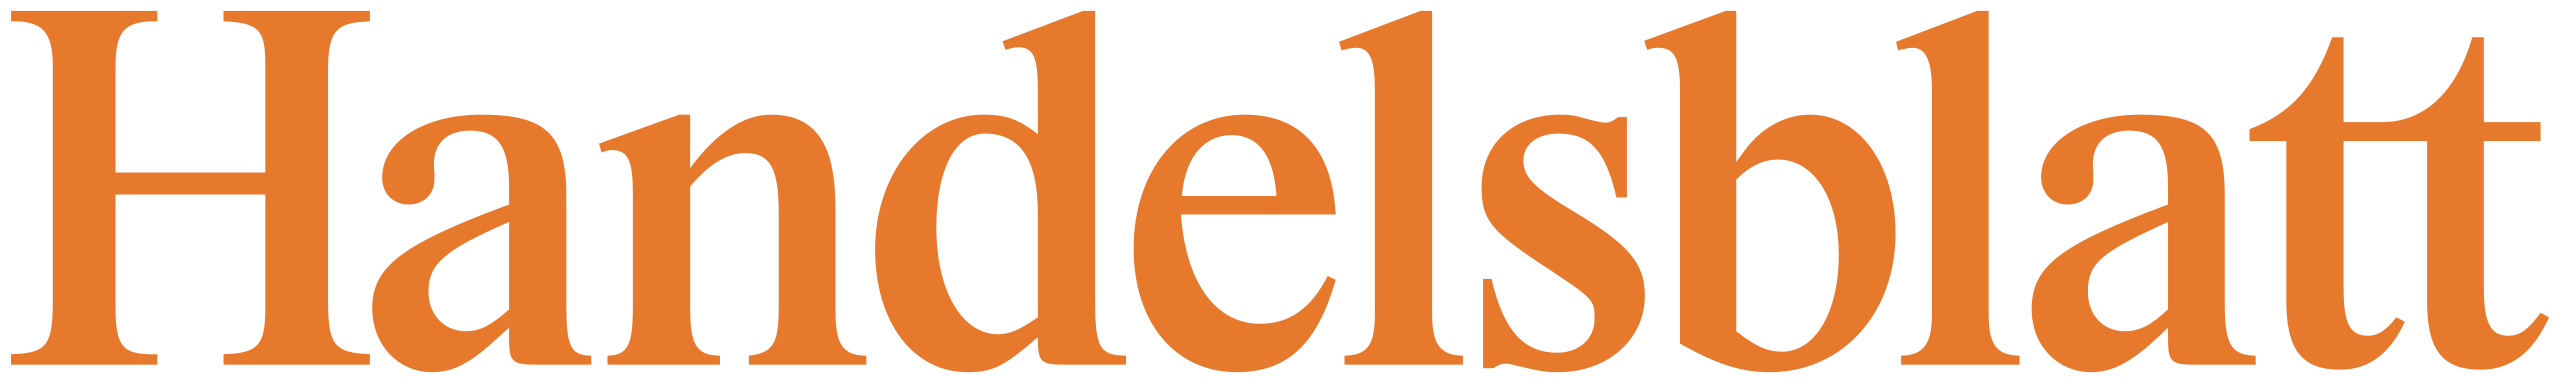 Datei:Handelsblatt 201x logo.svg – Wikipedia